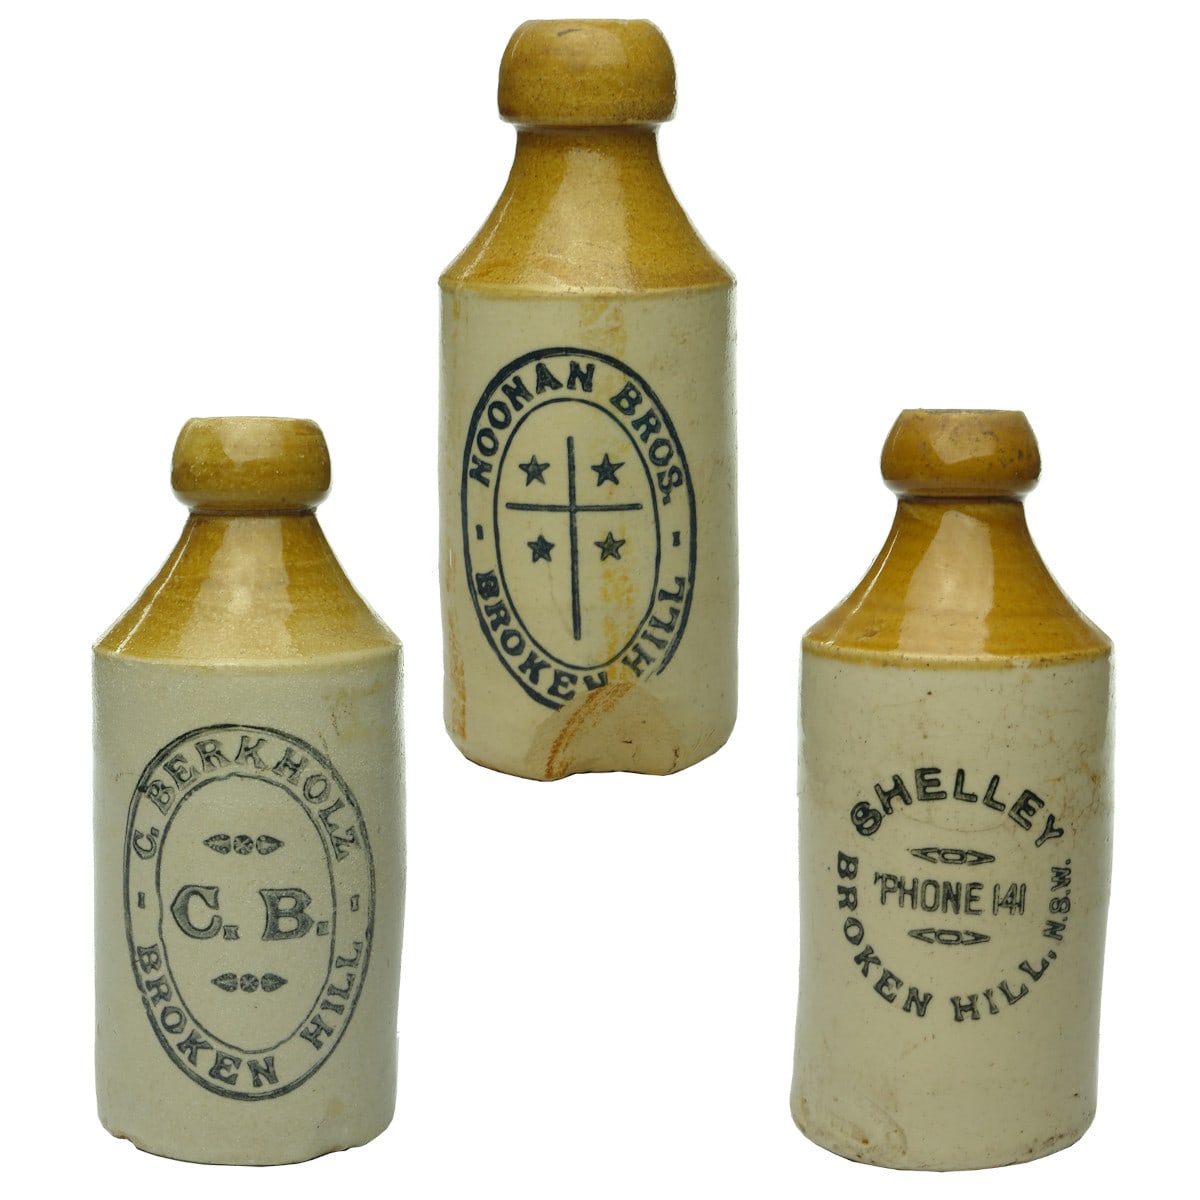 Three Broken Hill Ginger Beers: C. Berkholz; Noonan Bros. Shelley. (New South Wales)